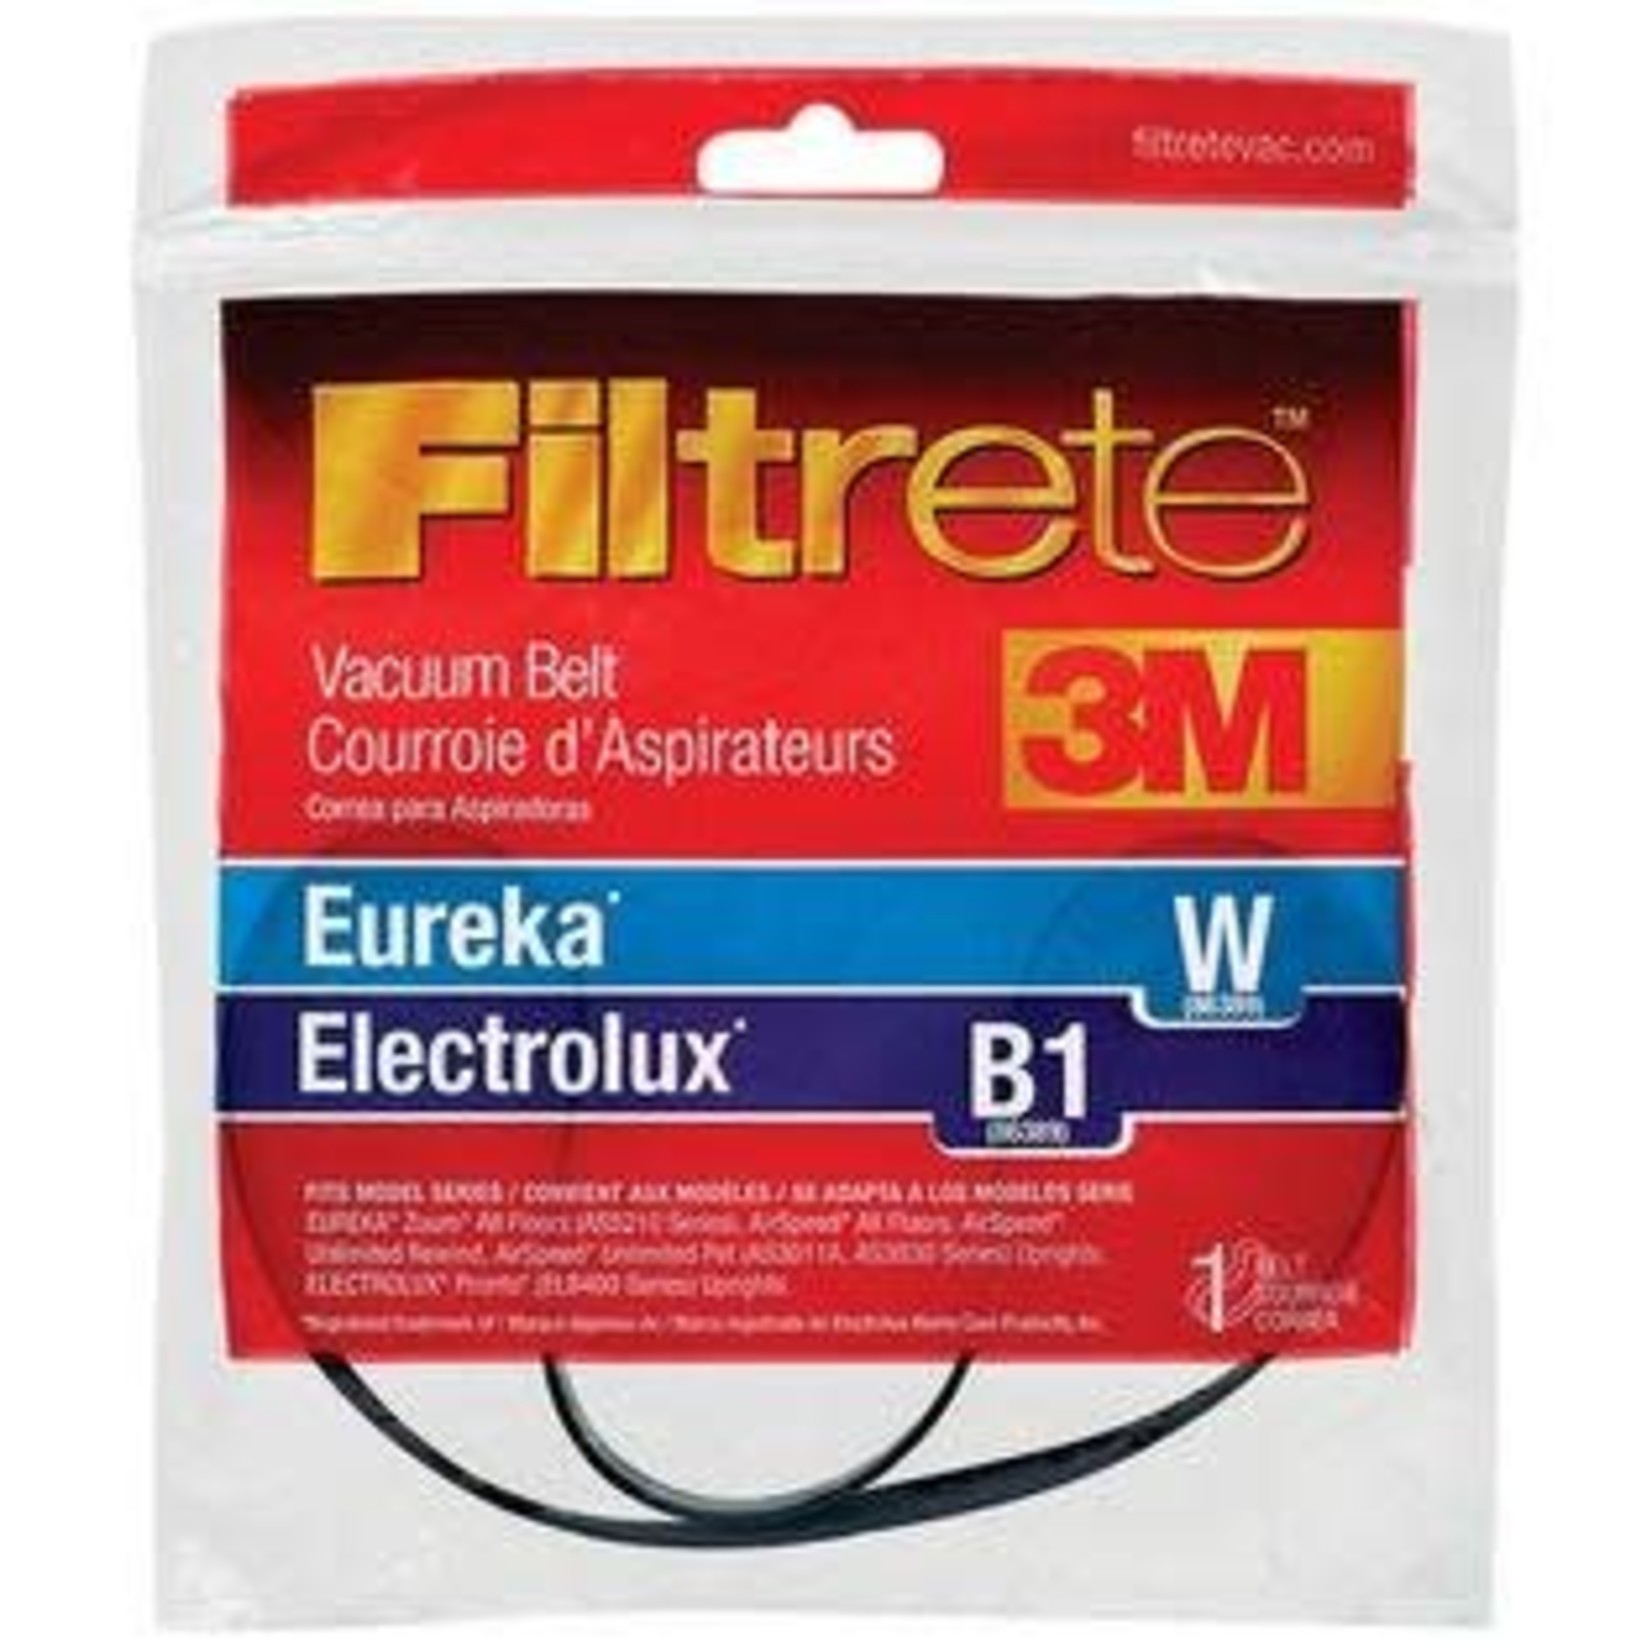 3M Filtrete / Eureka Type "W" Belt